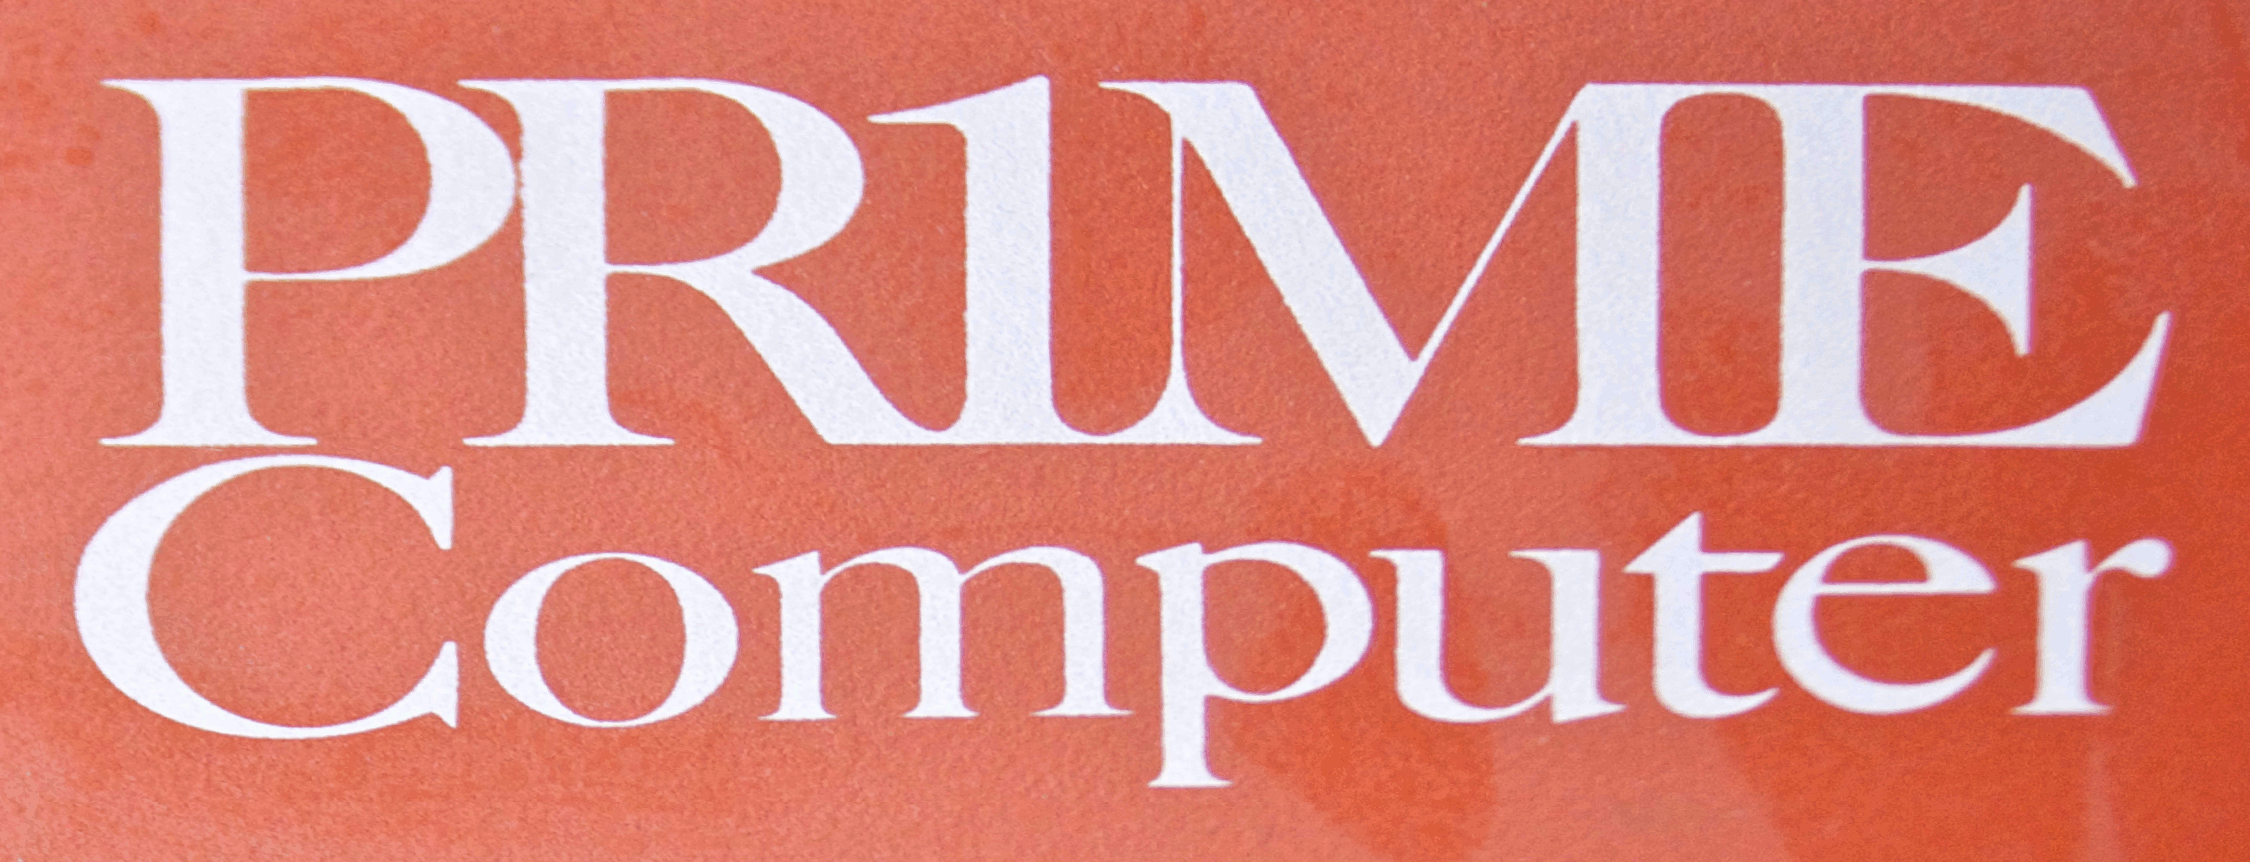 Prime Computer Logo - File:Prime Computer logo.png - Wikimedia Commons